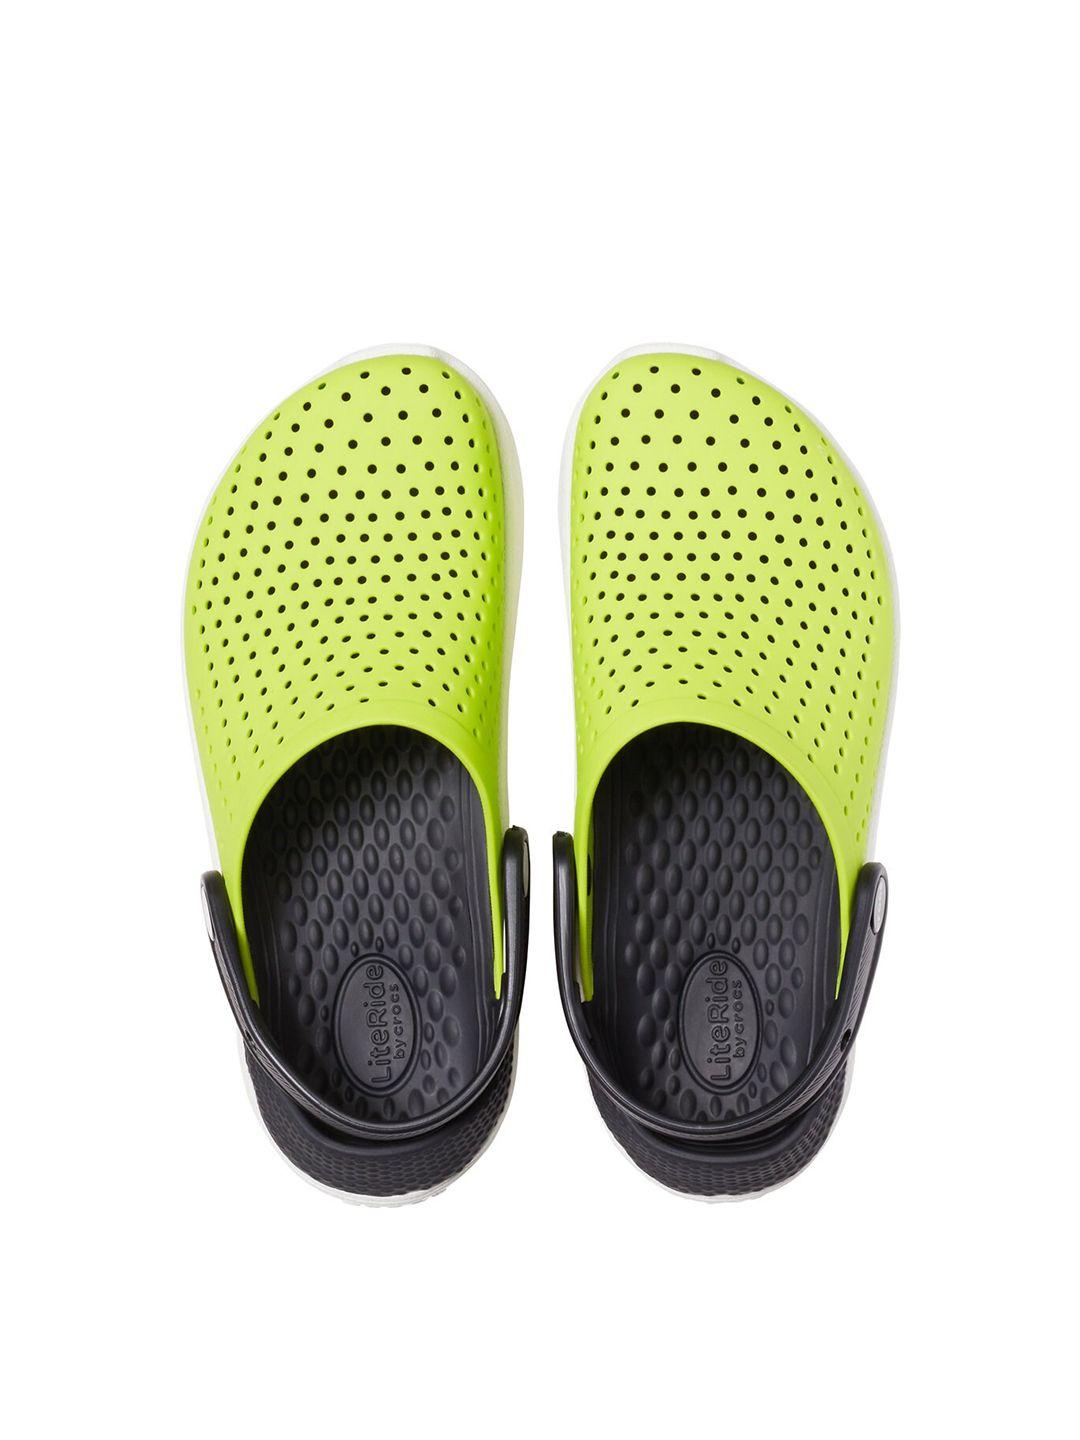 crocs unisex kids green & black clogs sandals